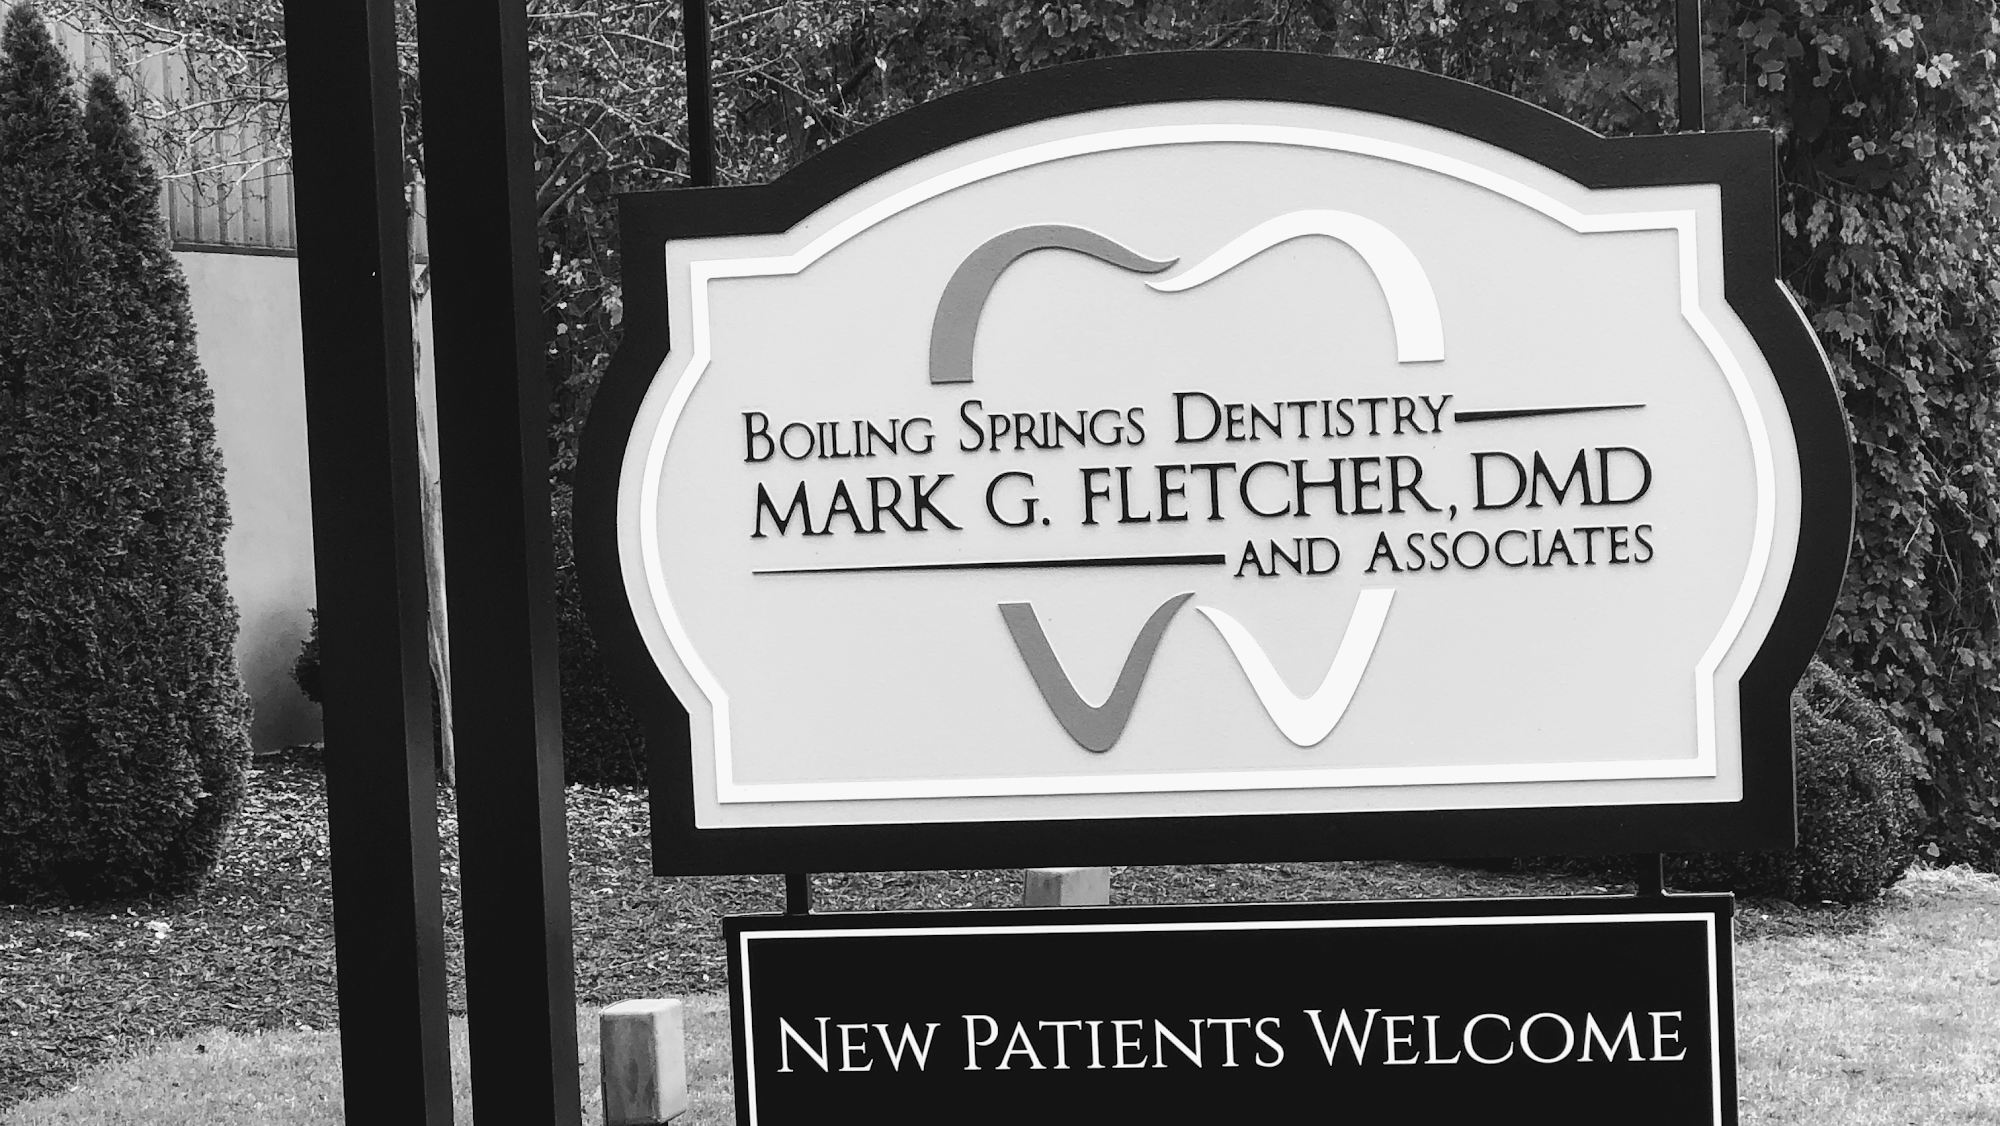 Boiling Springs Dentistry, Mark G. Fletcher, DMD and Associates